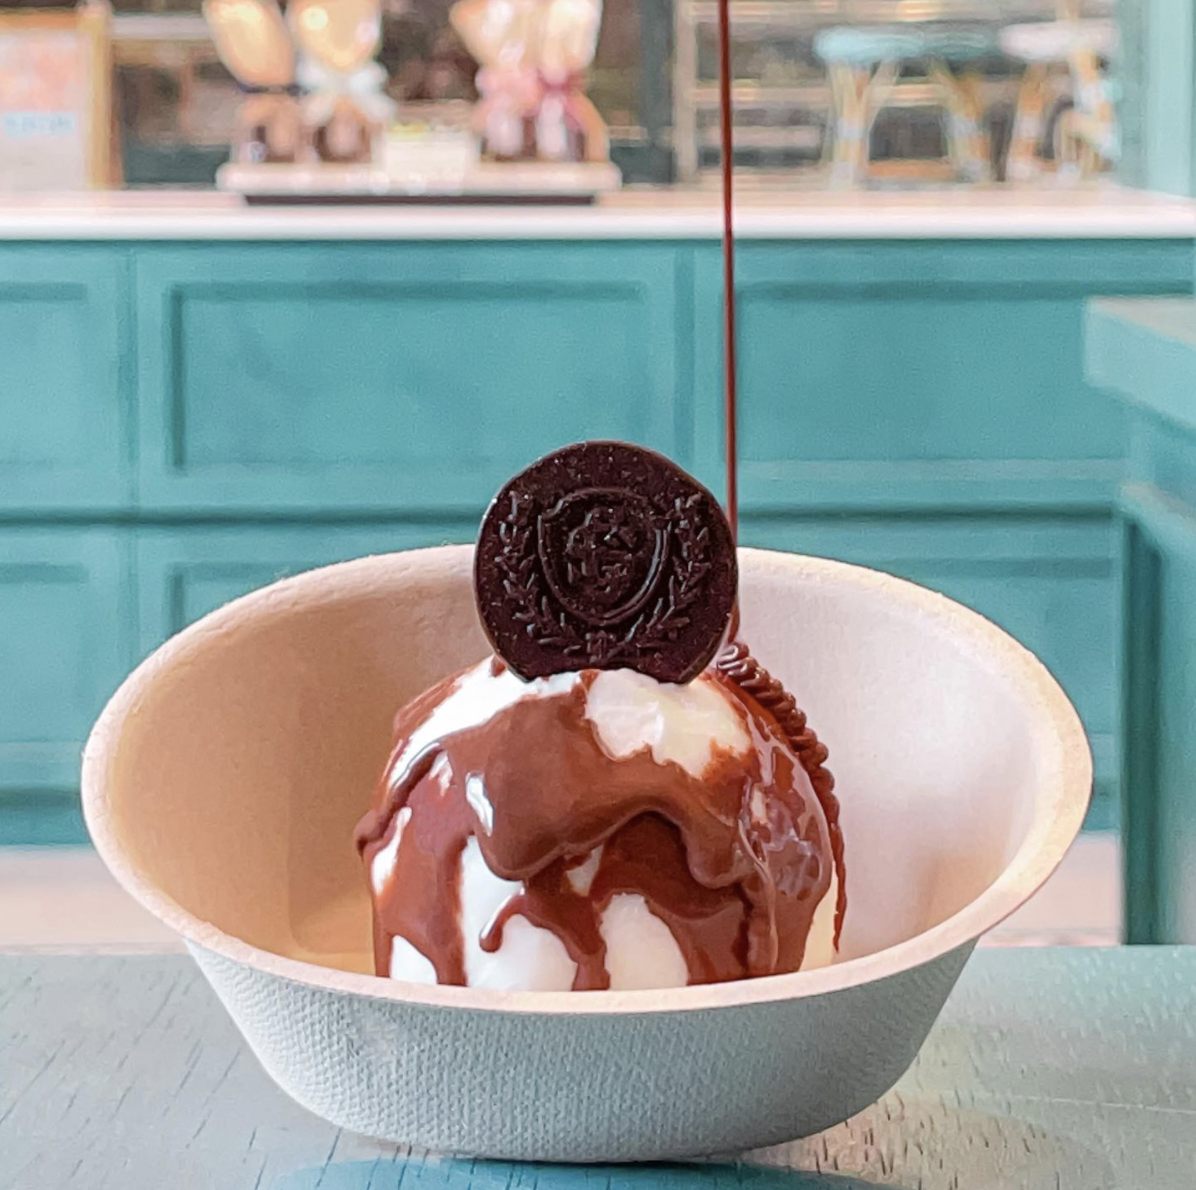 A bowl of Singapore Chocolate's Ice Cream Sundae